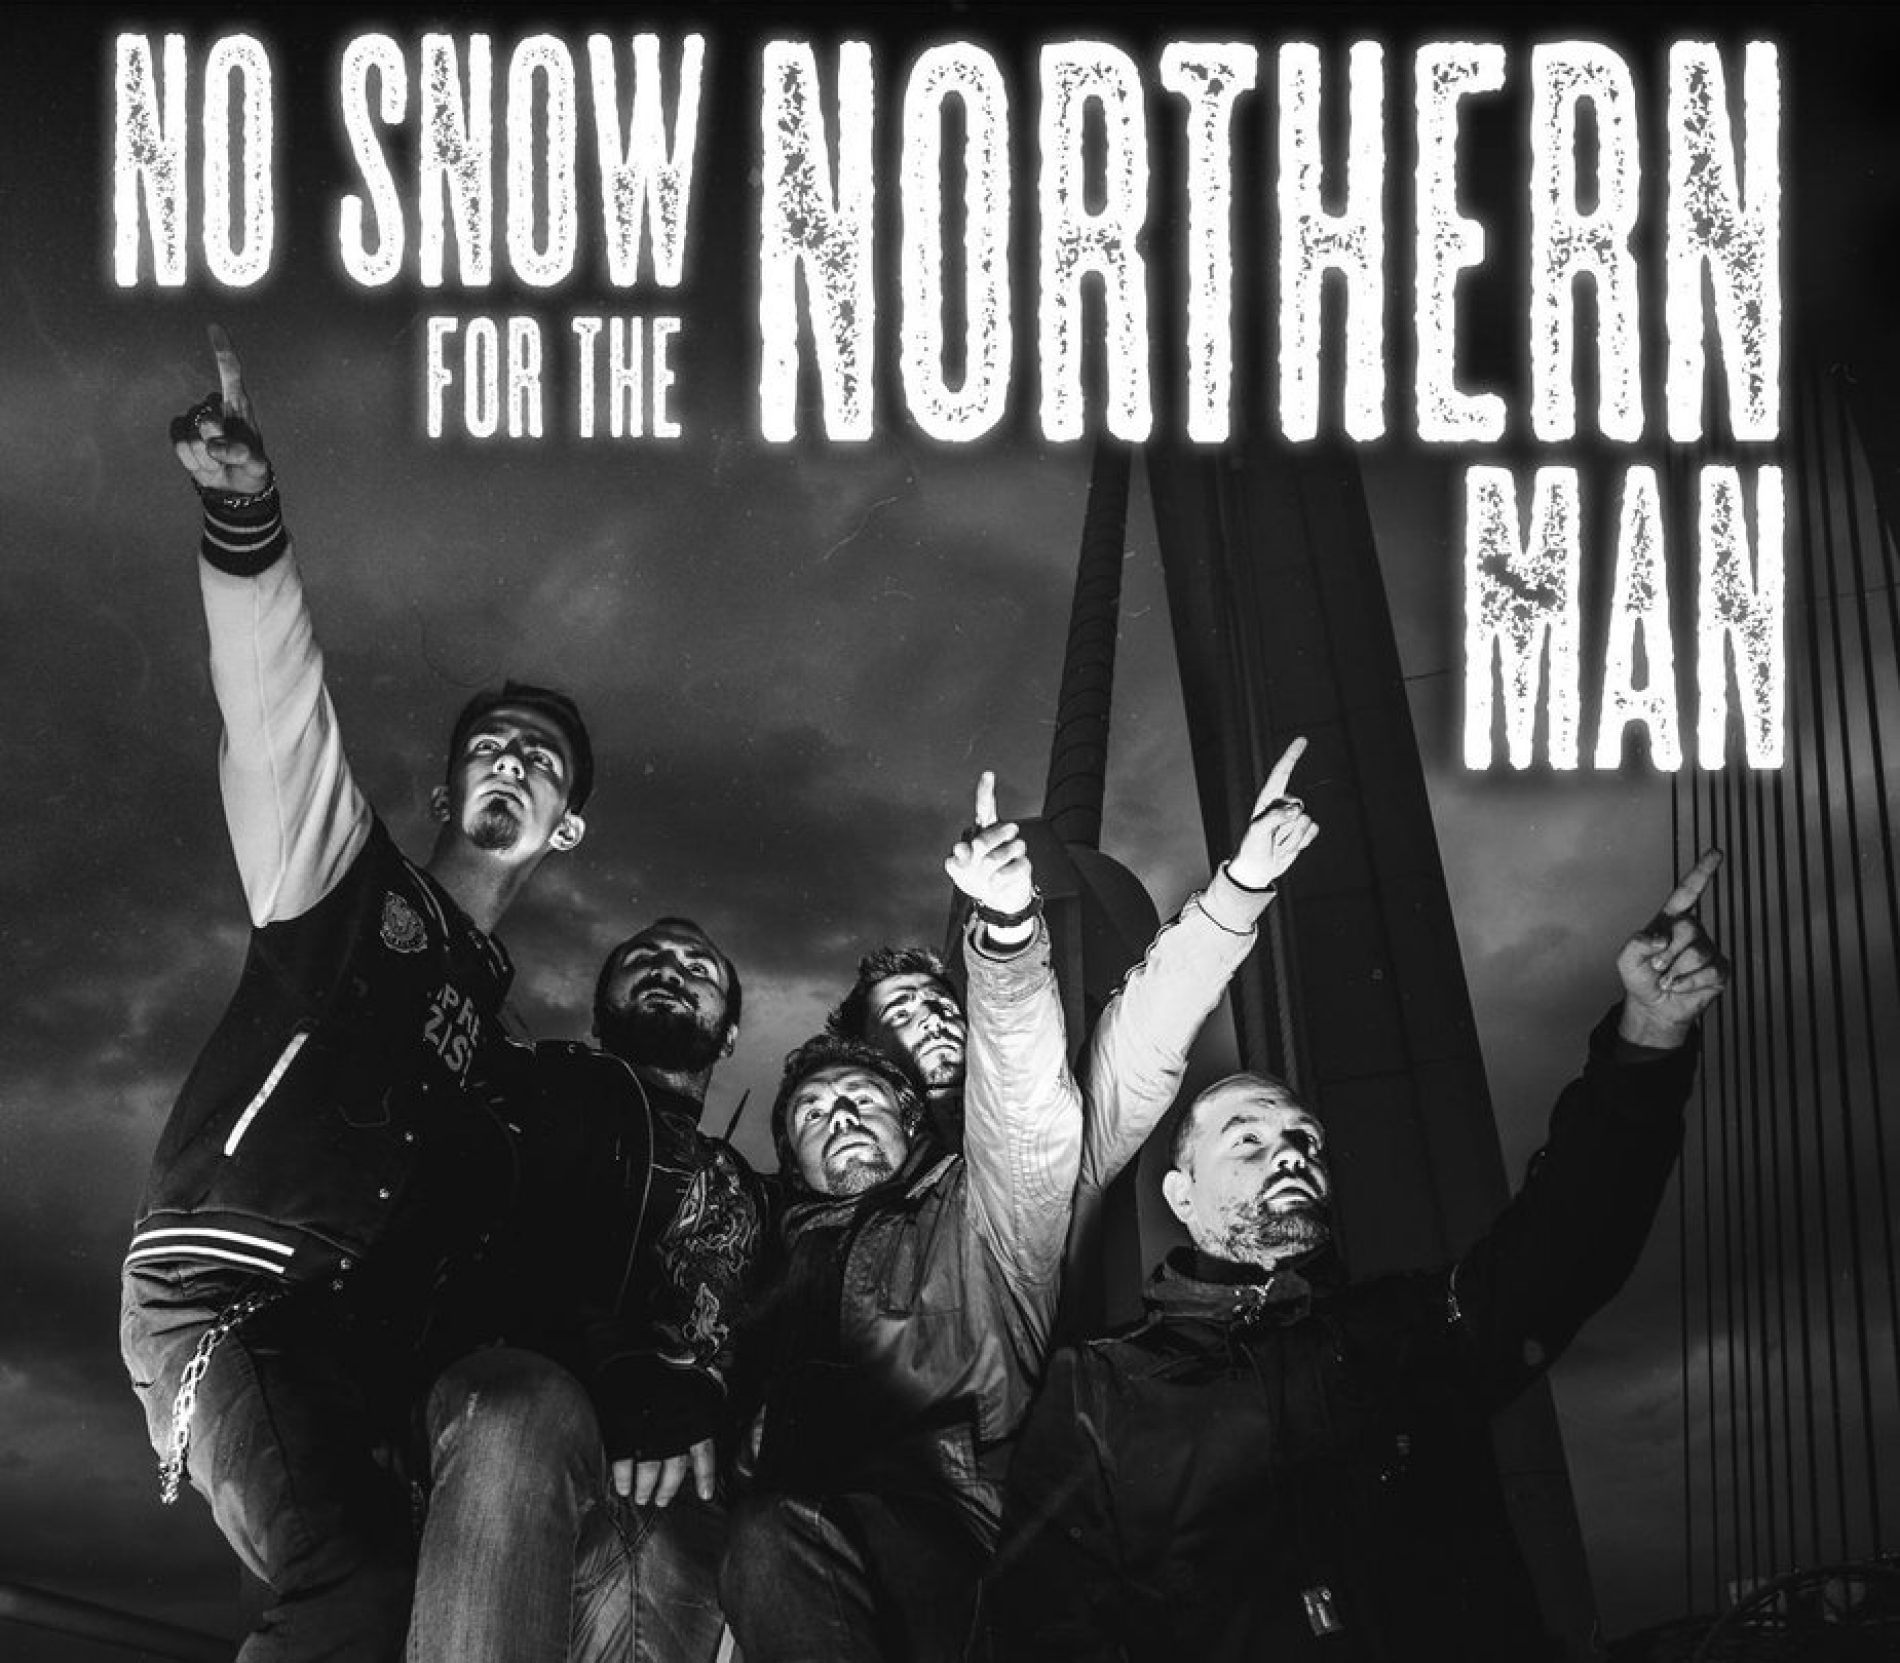 Wooldozer – No Snow For The Northern Man (single nou audio)